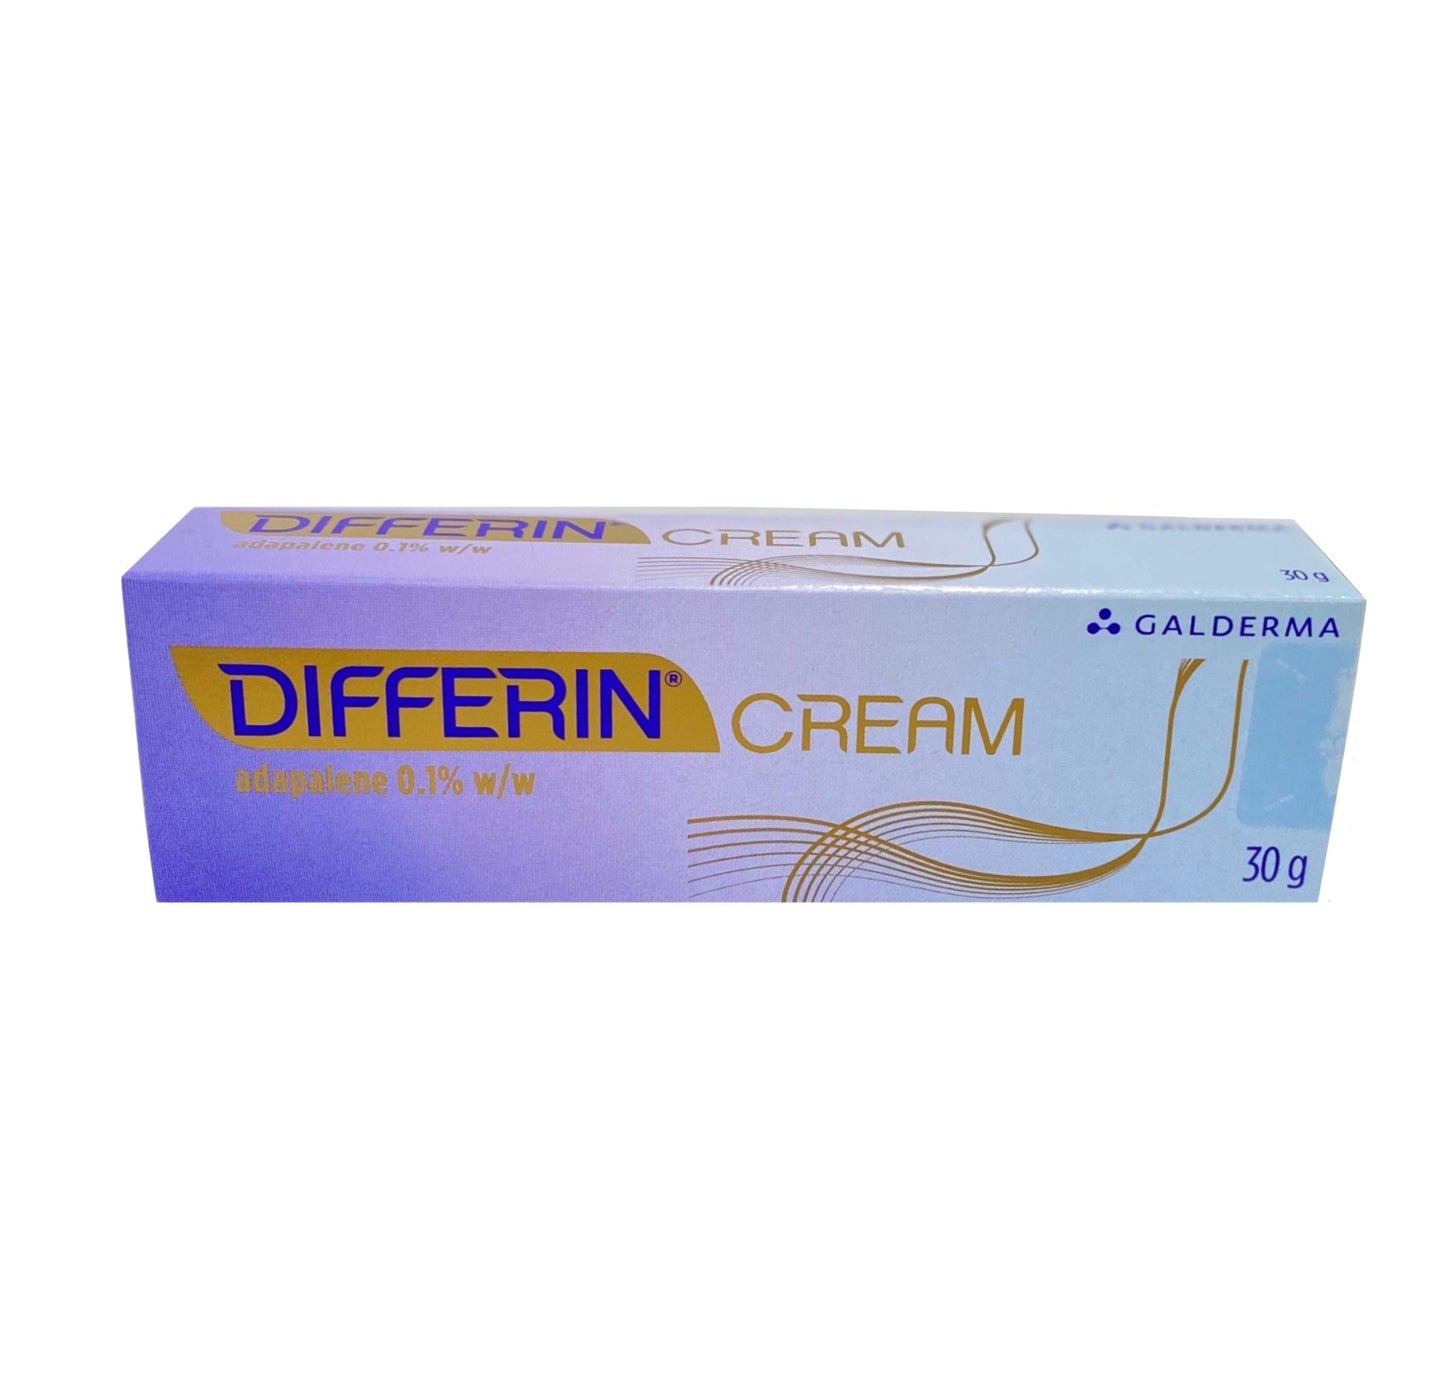 Differin 0.1% Cream 30g